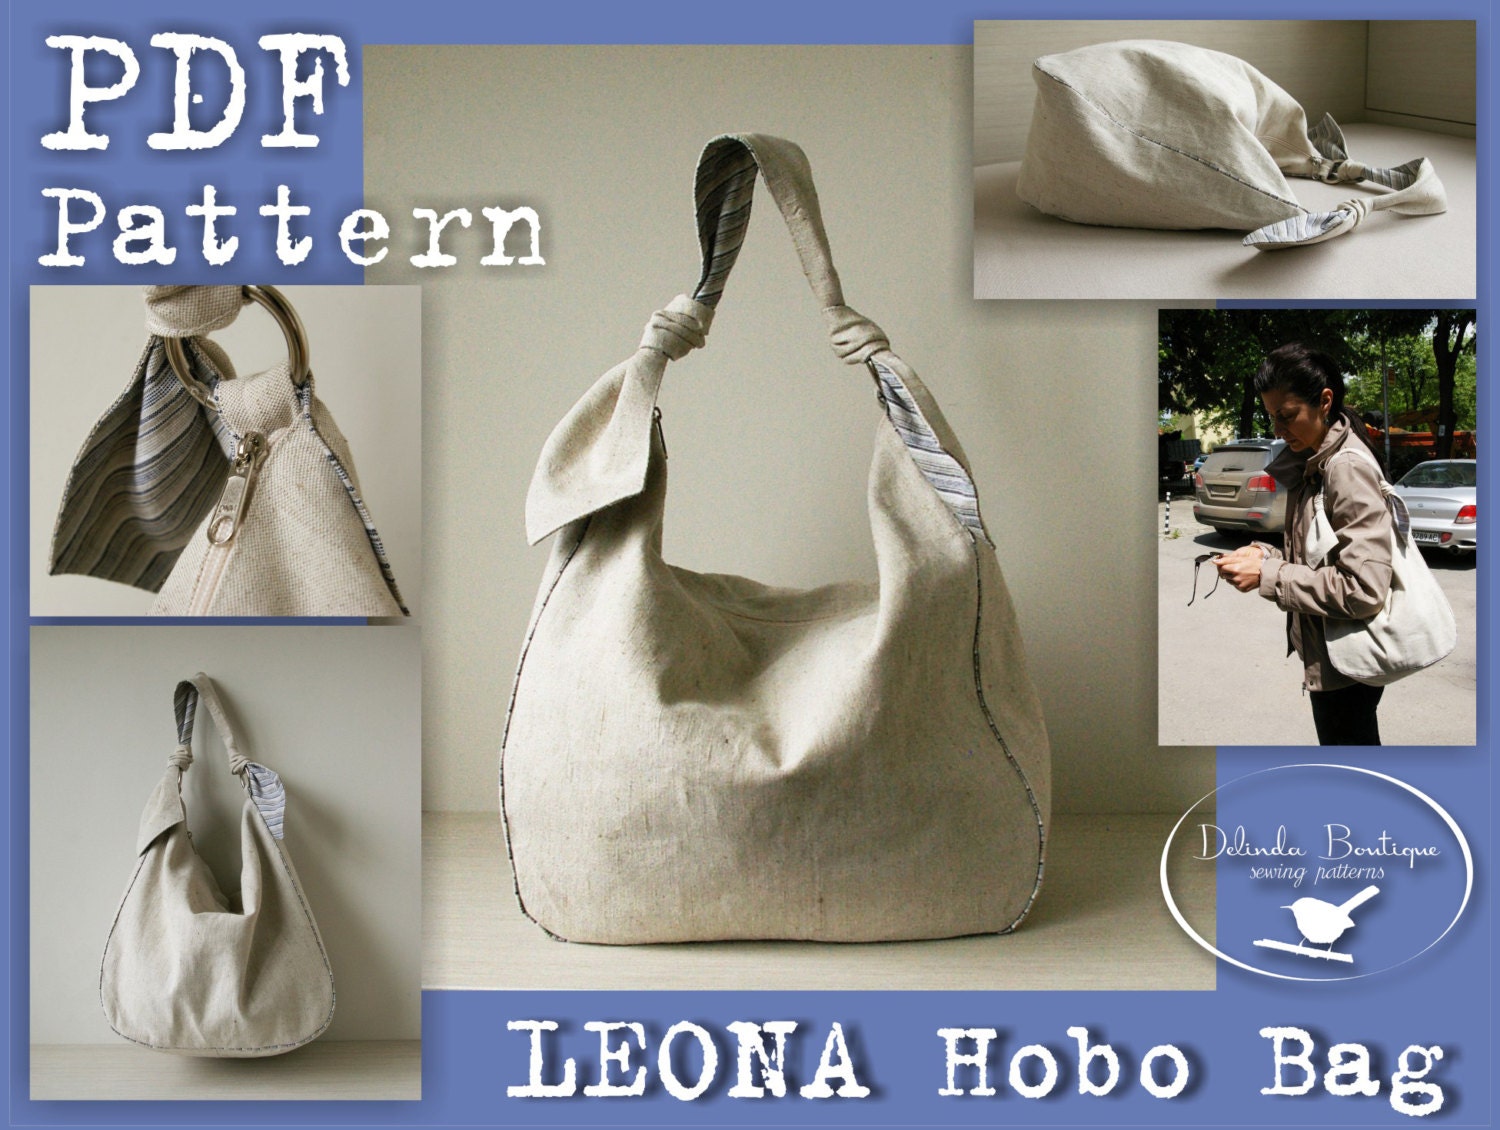 Pola hobo bag XL, sewing pattern - slouchy, shoulder bag